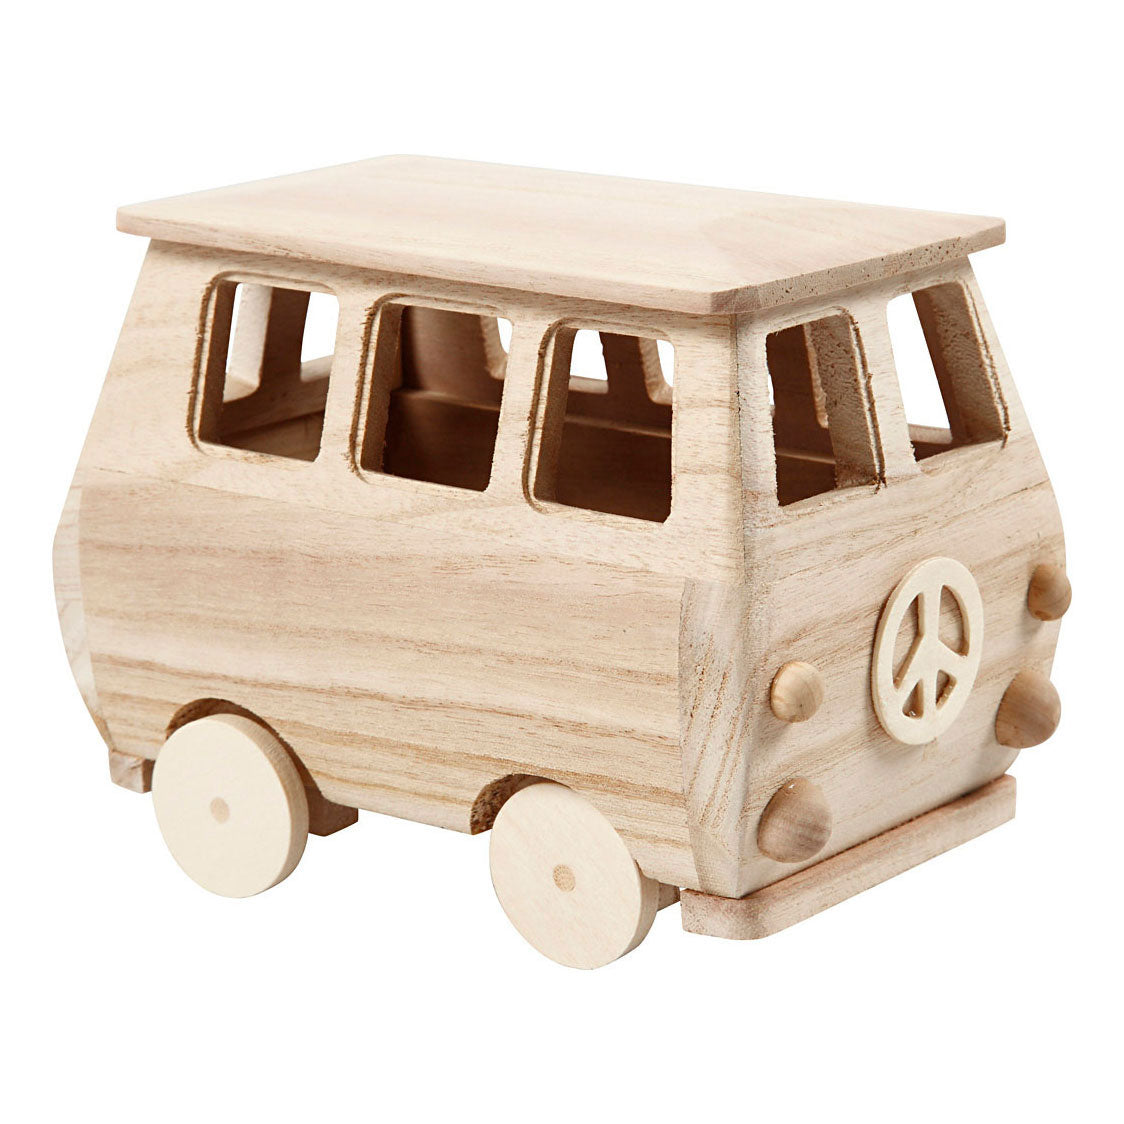 Creativ Company Minibús de madera, 17x10x13cm